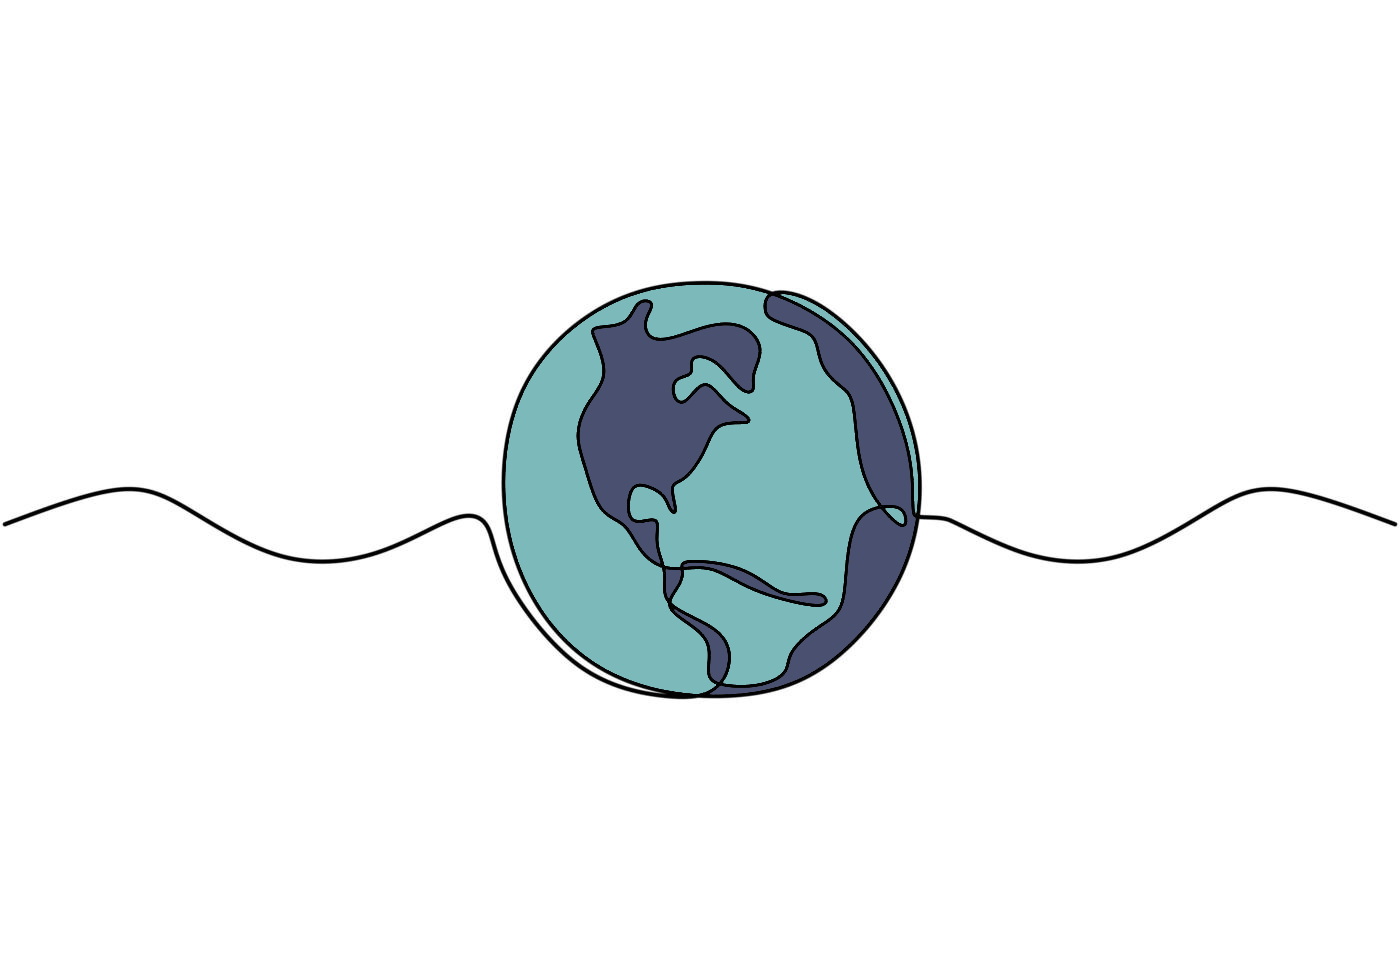 earth-globe-one-line-drawing-of-world-map-illustration-minimalist-design-of-minimalism-isolated-on-white-background-vector